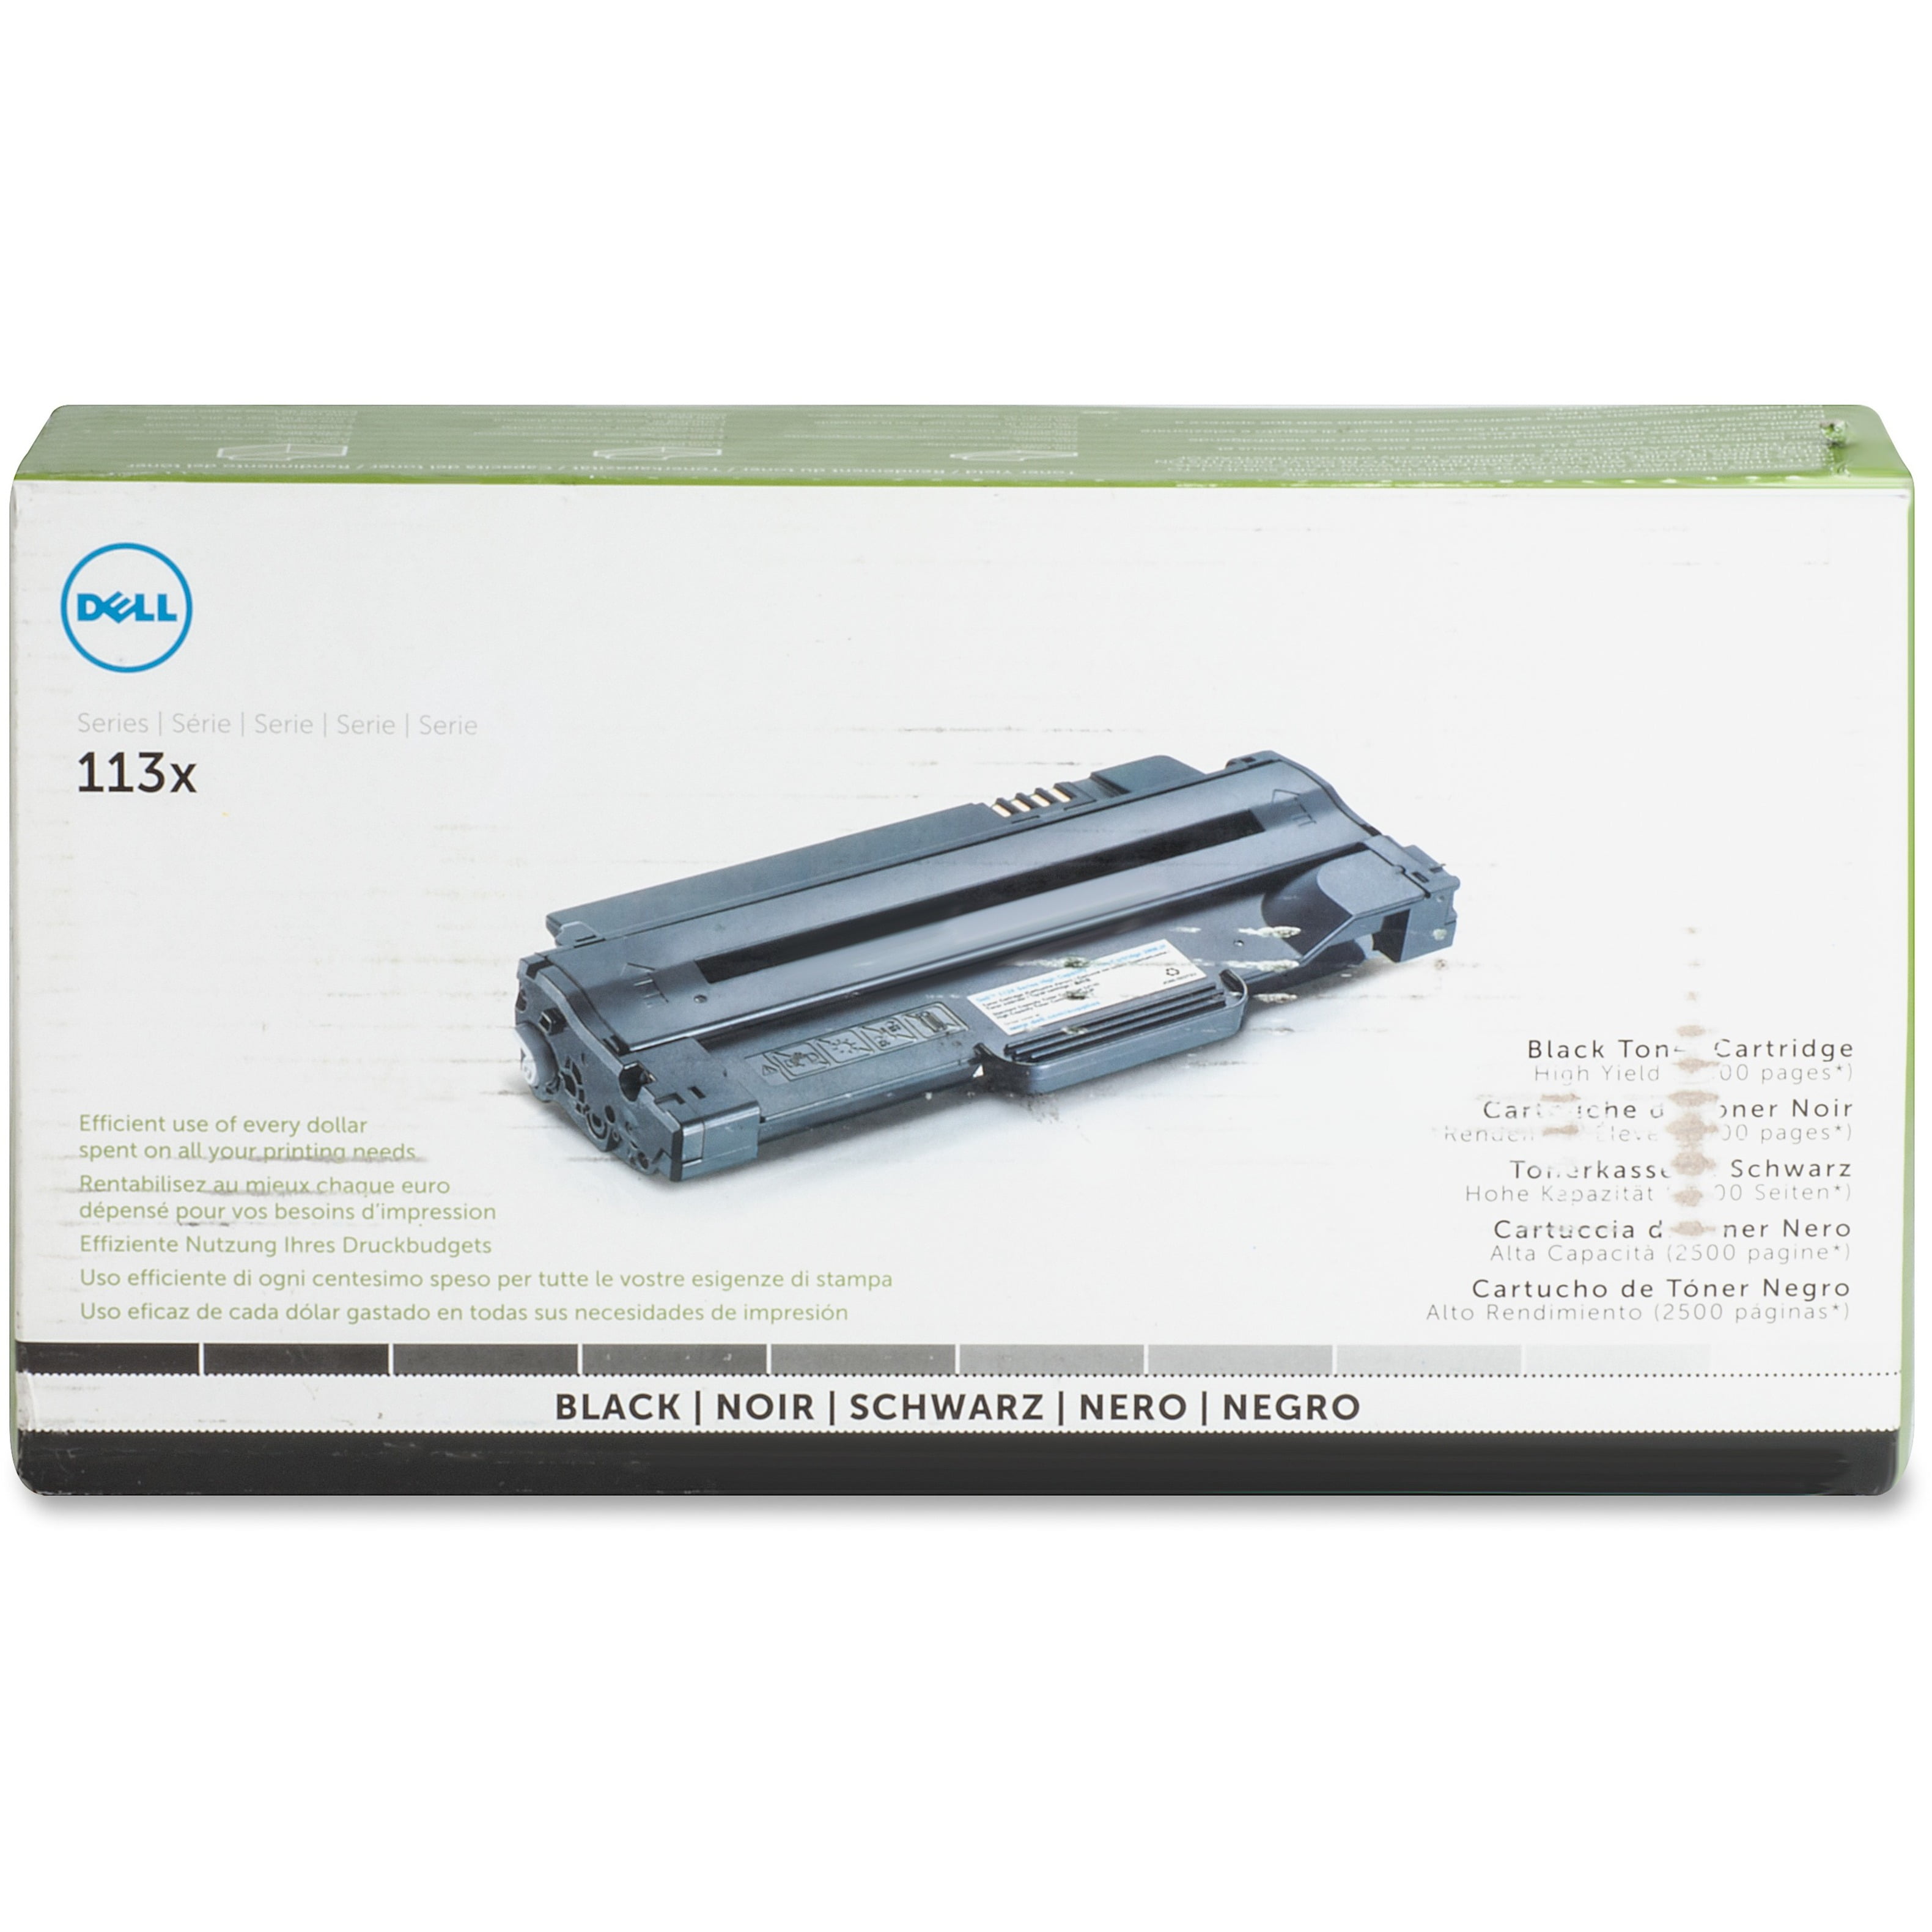 Dell PK941 High Yield Toner Cartridge for Laser Printers Black for sale online 